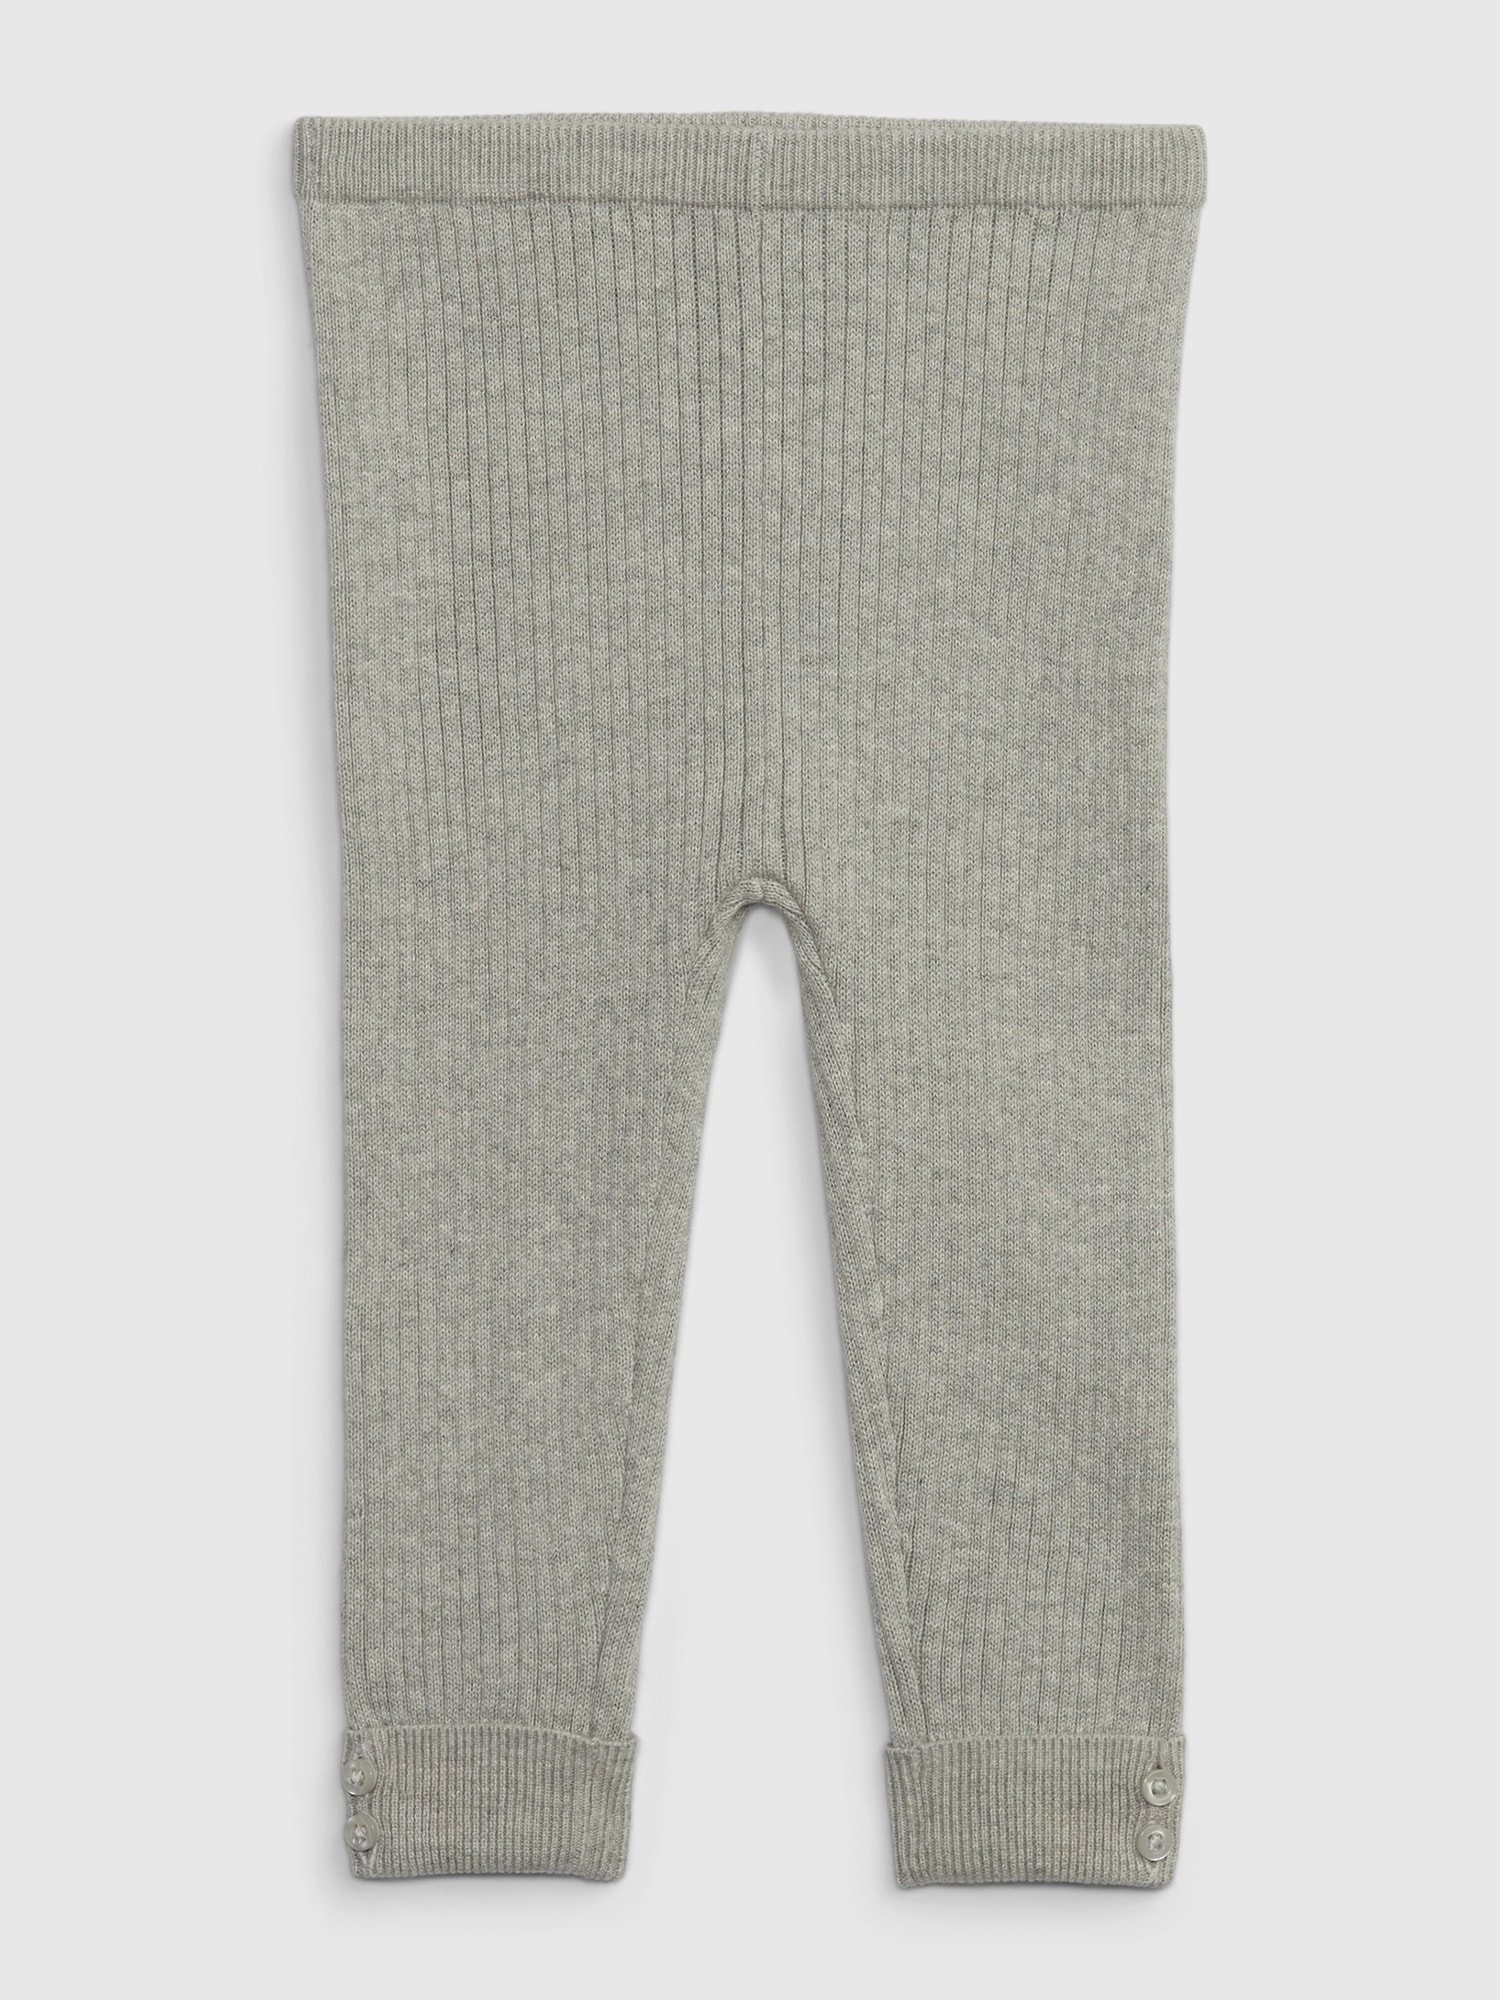 Gap Sweater Leggings (Bundle of 2), 18-24 Months